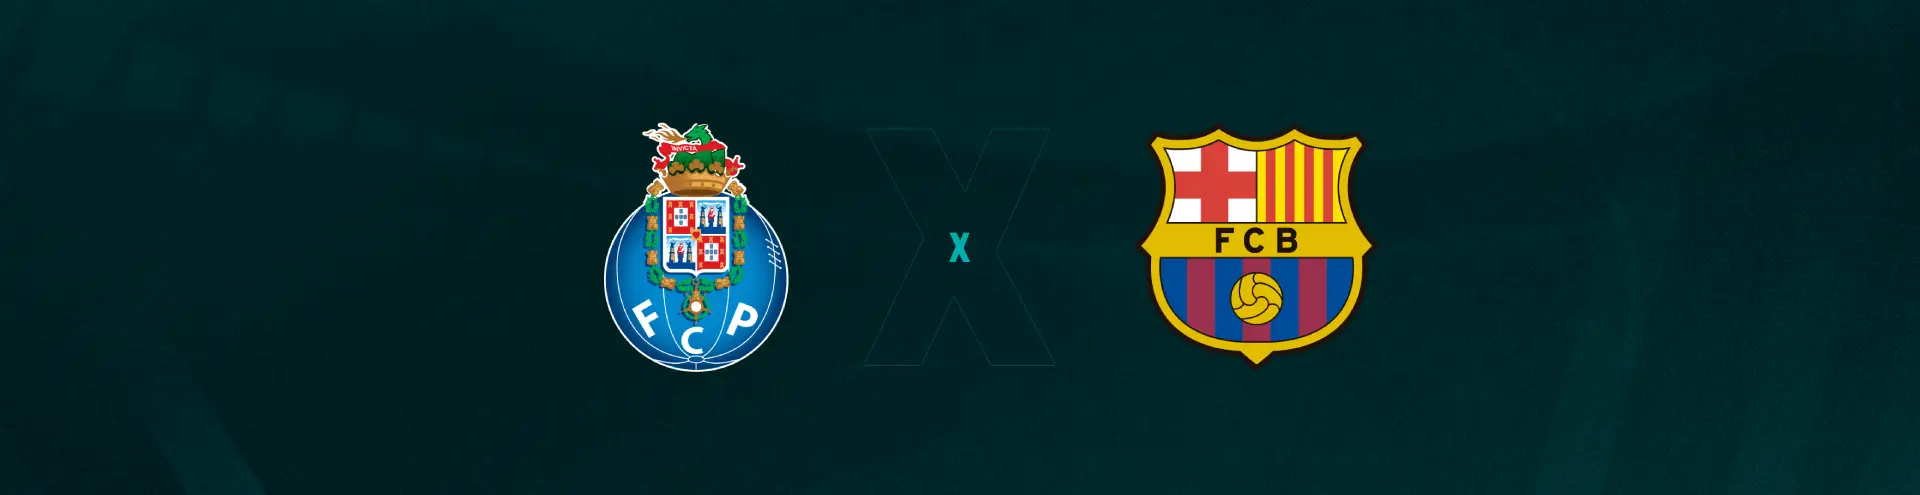 Barcelona x Porto: palpites, odds, onde assistir ao vivo